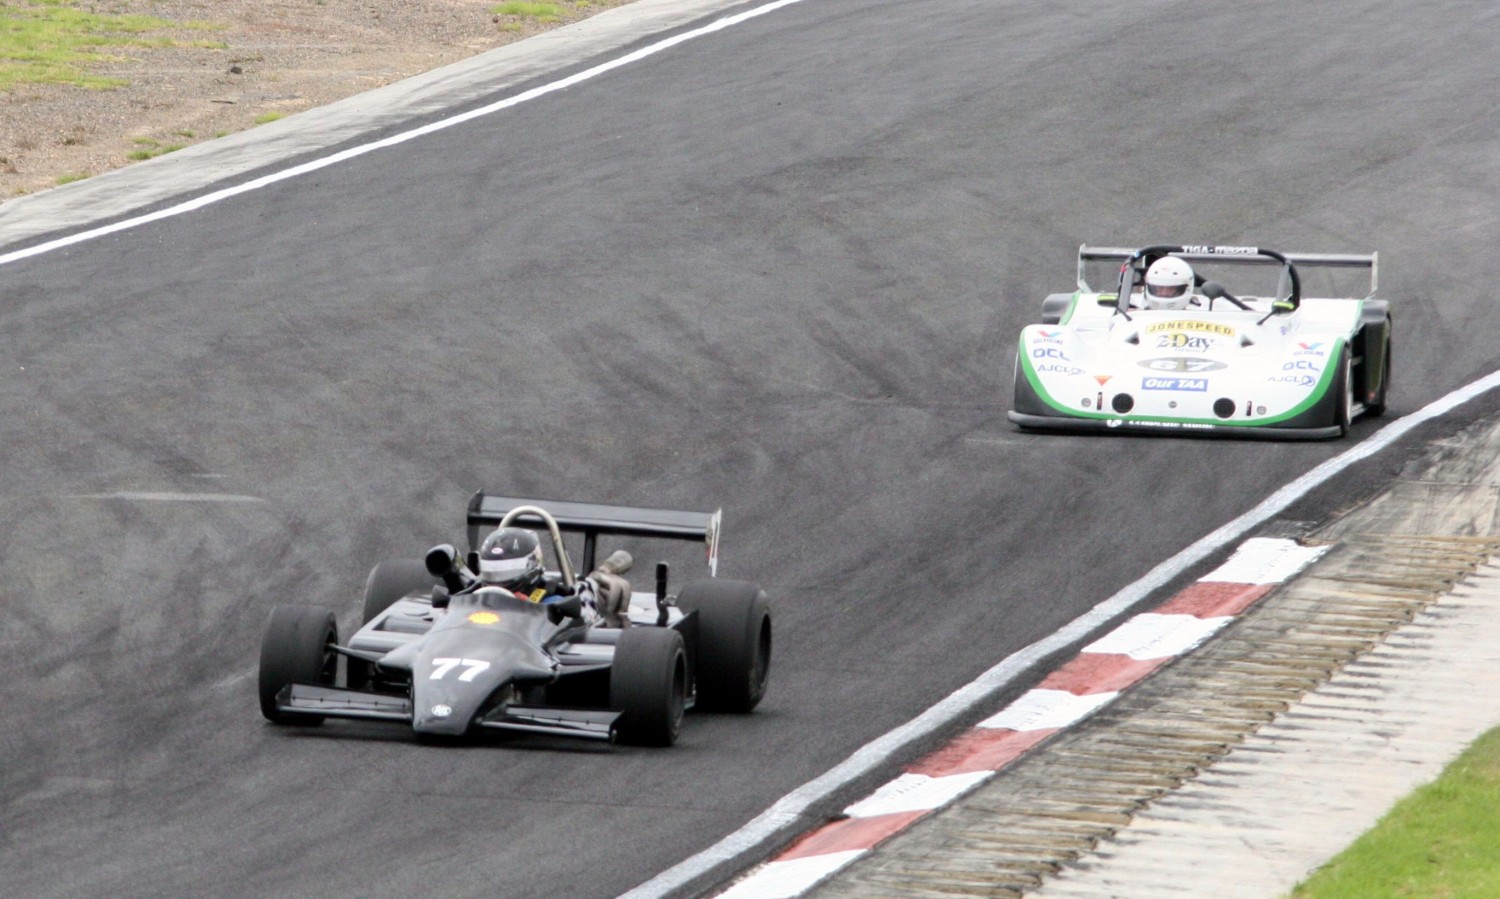 1981 Ralt RT4 Formula Atlantic